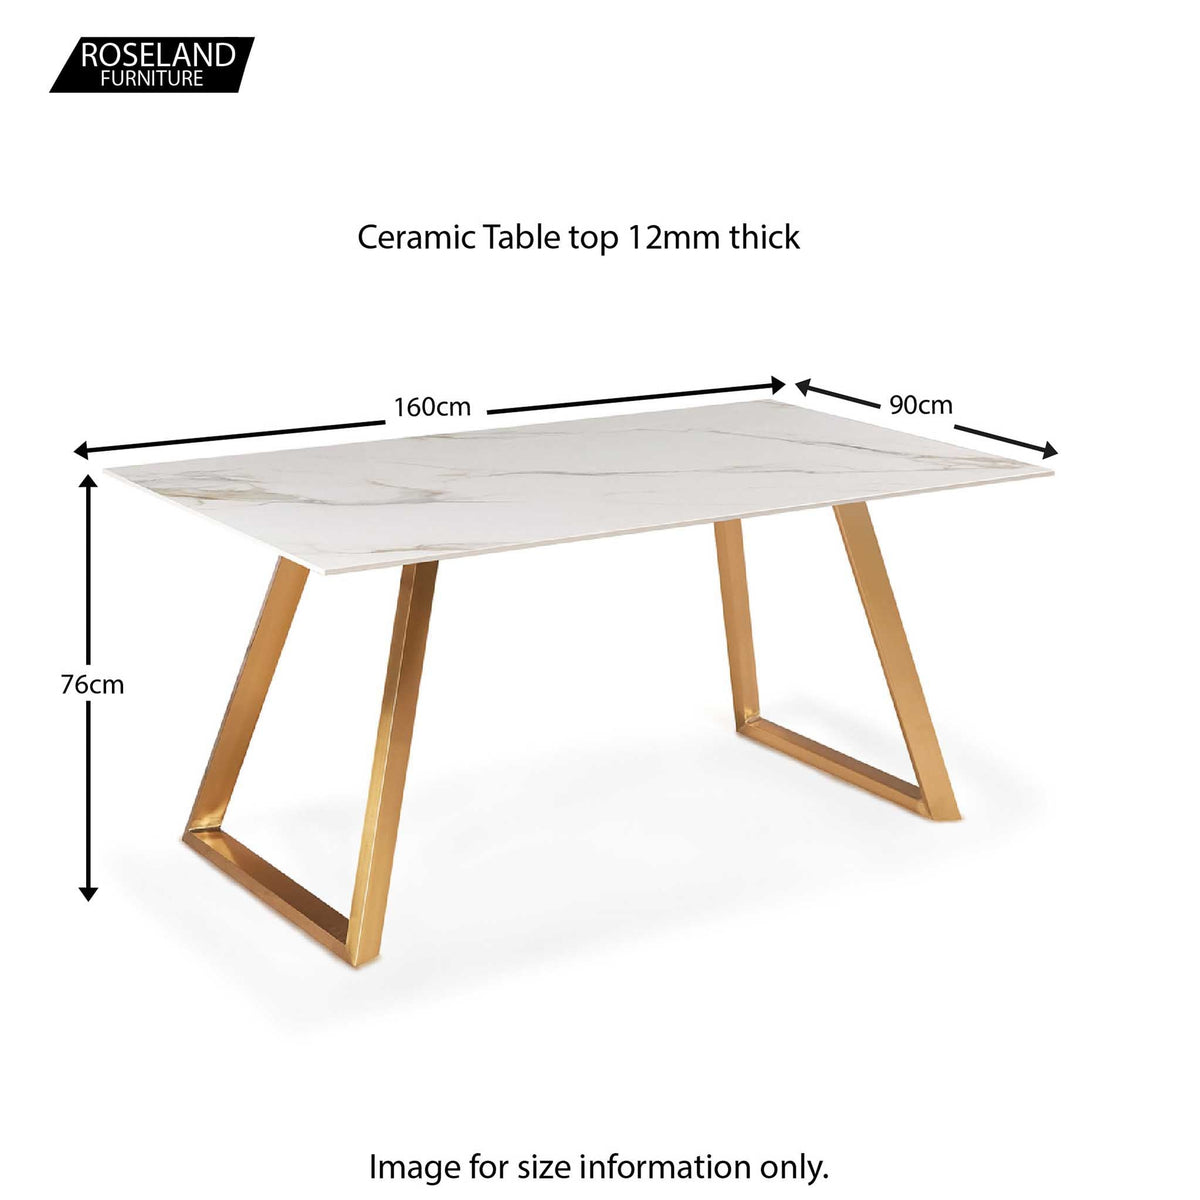 Amalfi 160cm Ceramic Dining Table - Size Guide